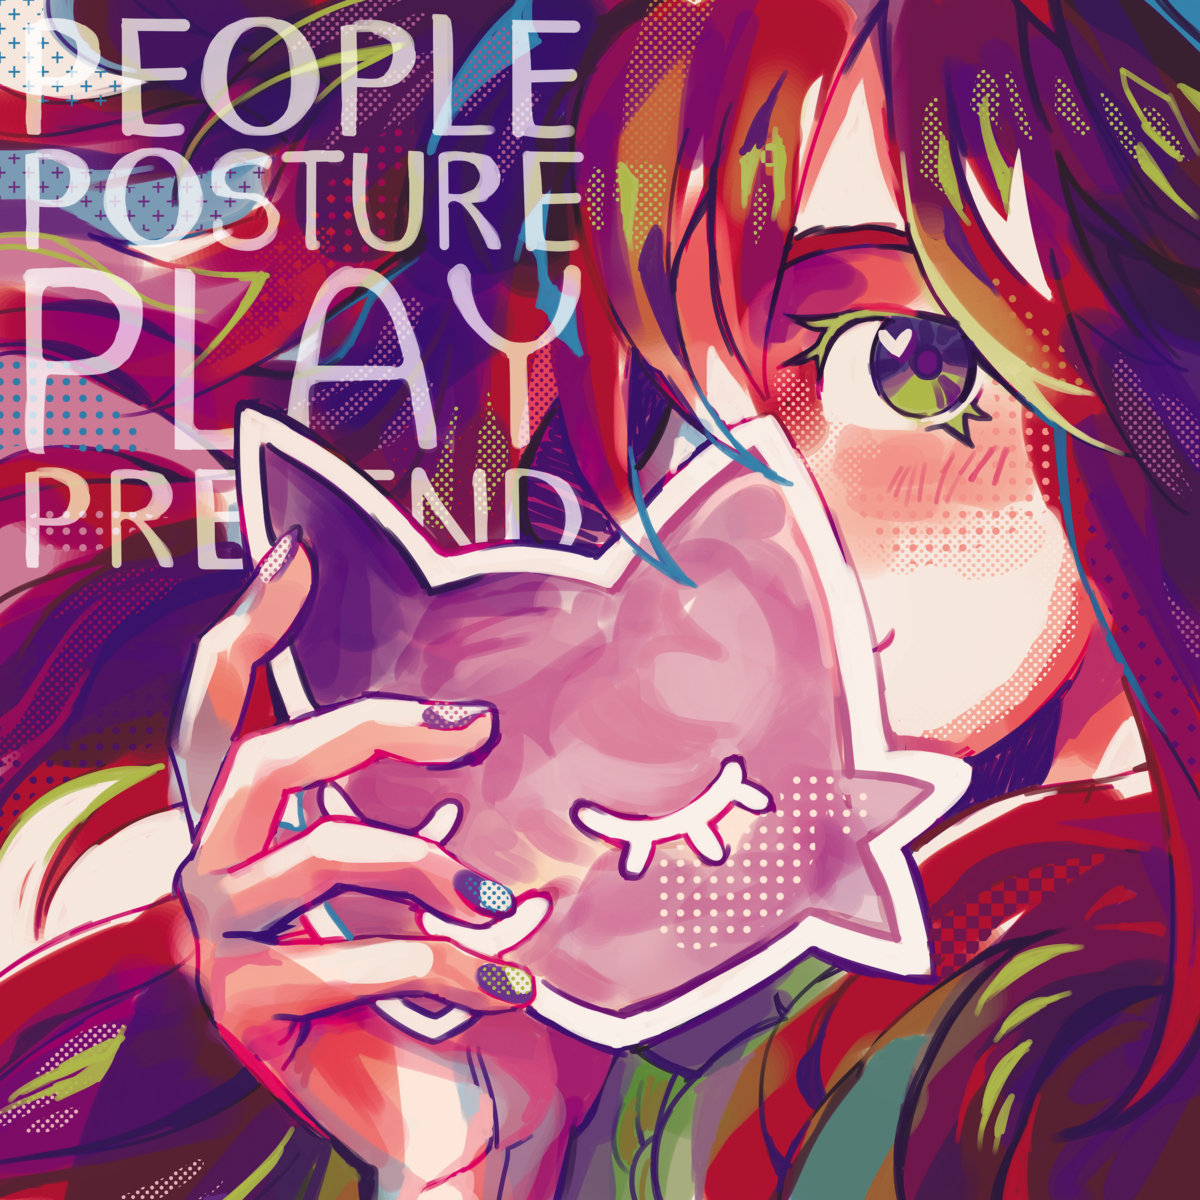 Jamie Paige People Posture Play Pretend cover artwork